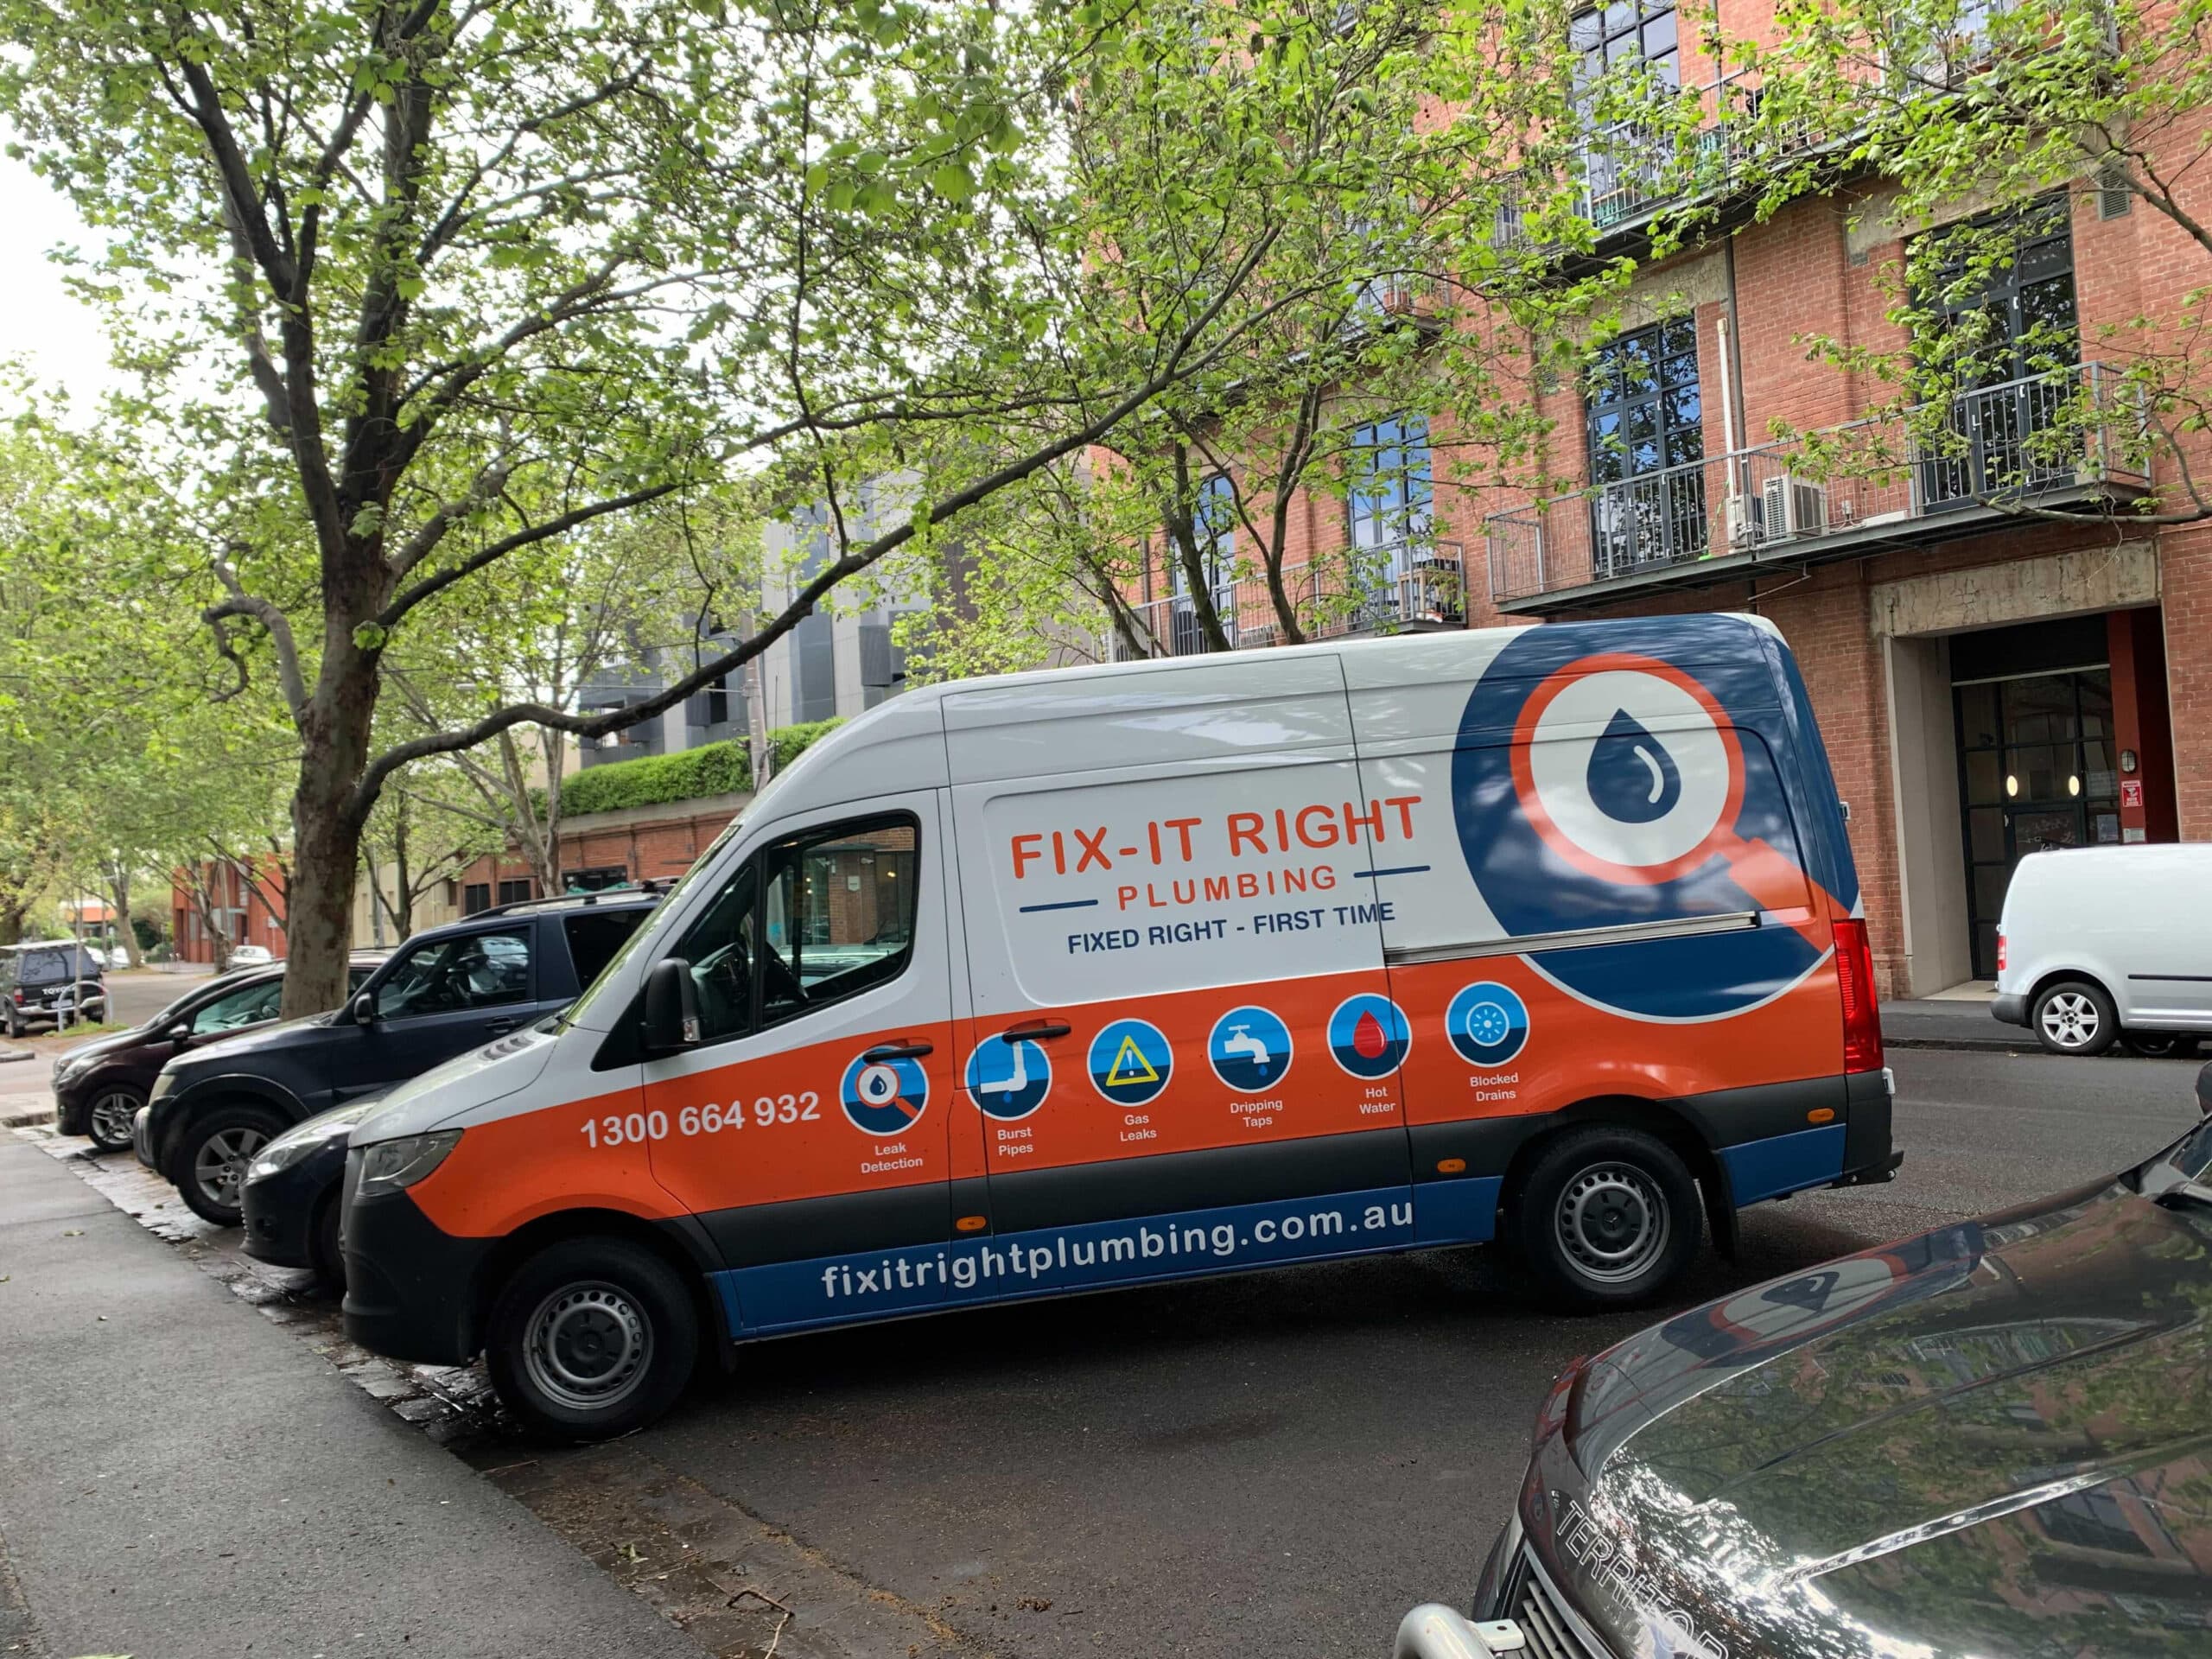 Melbourne plumbing company truck fleet for Fix-It Right Plumbing